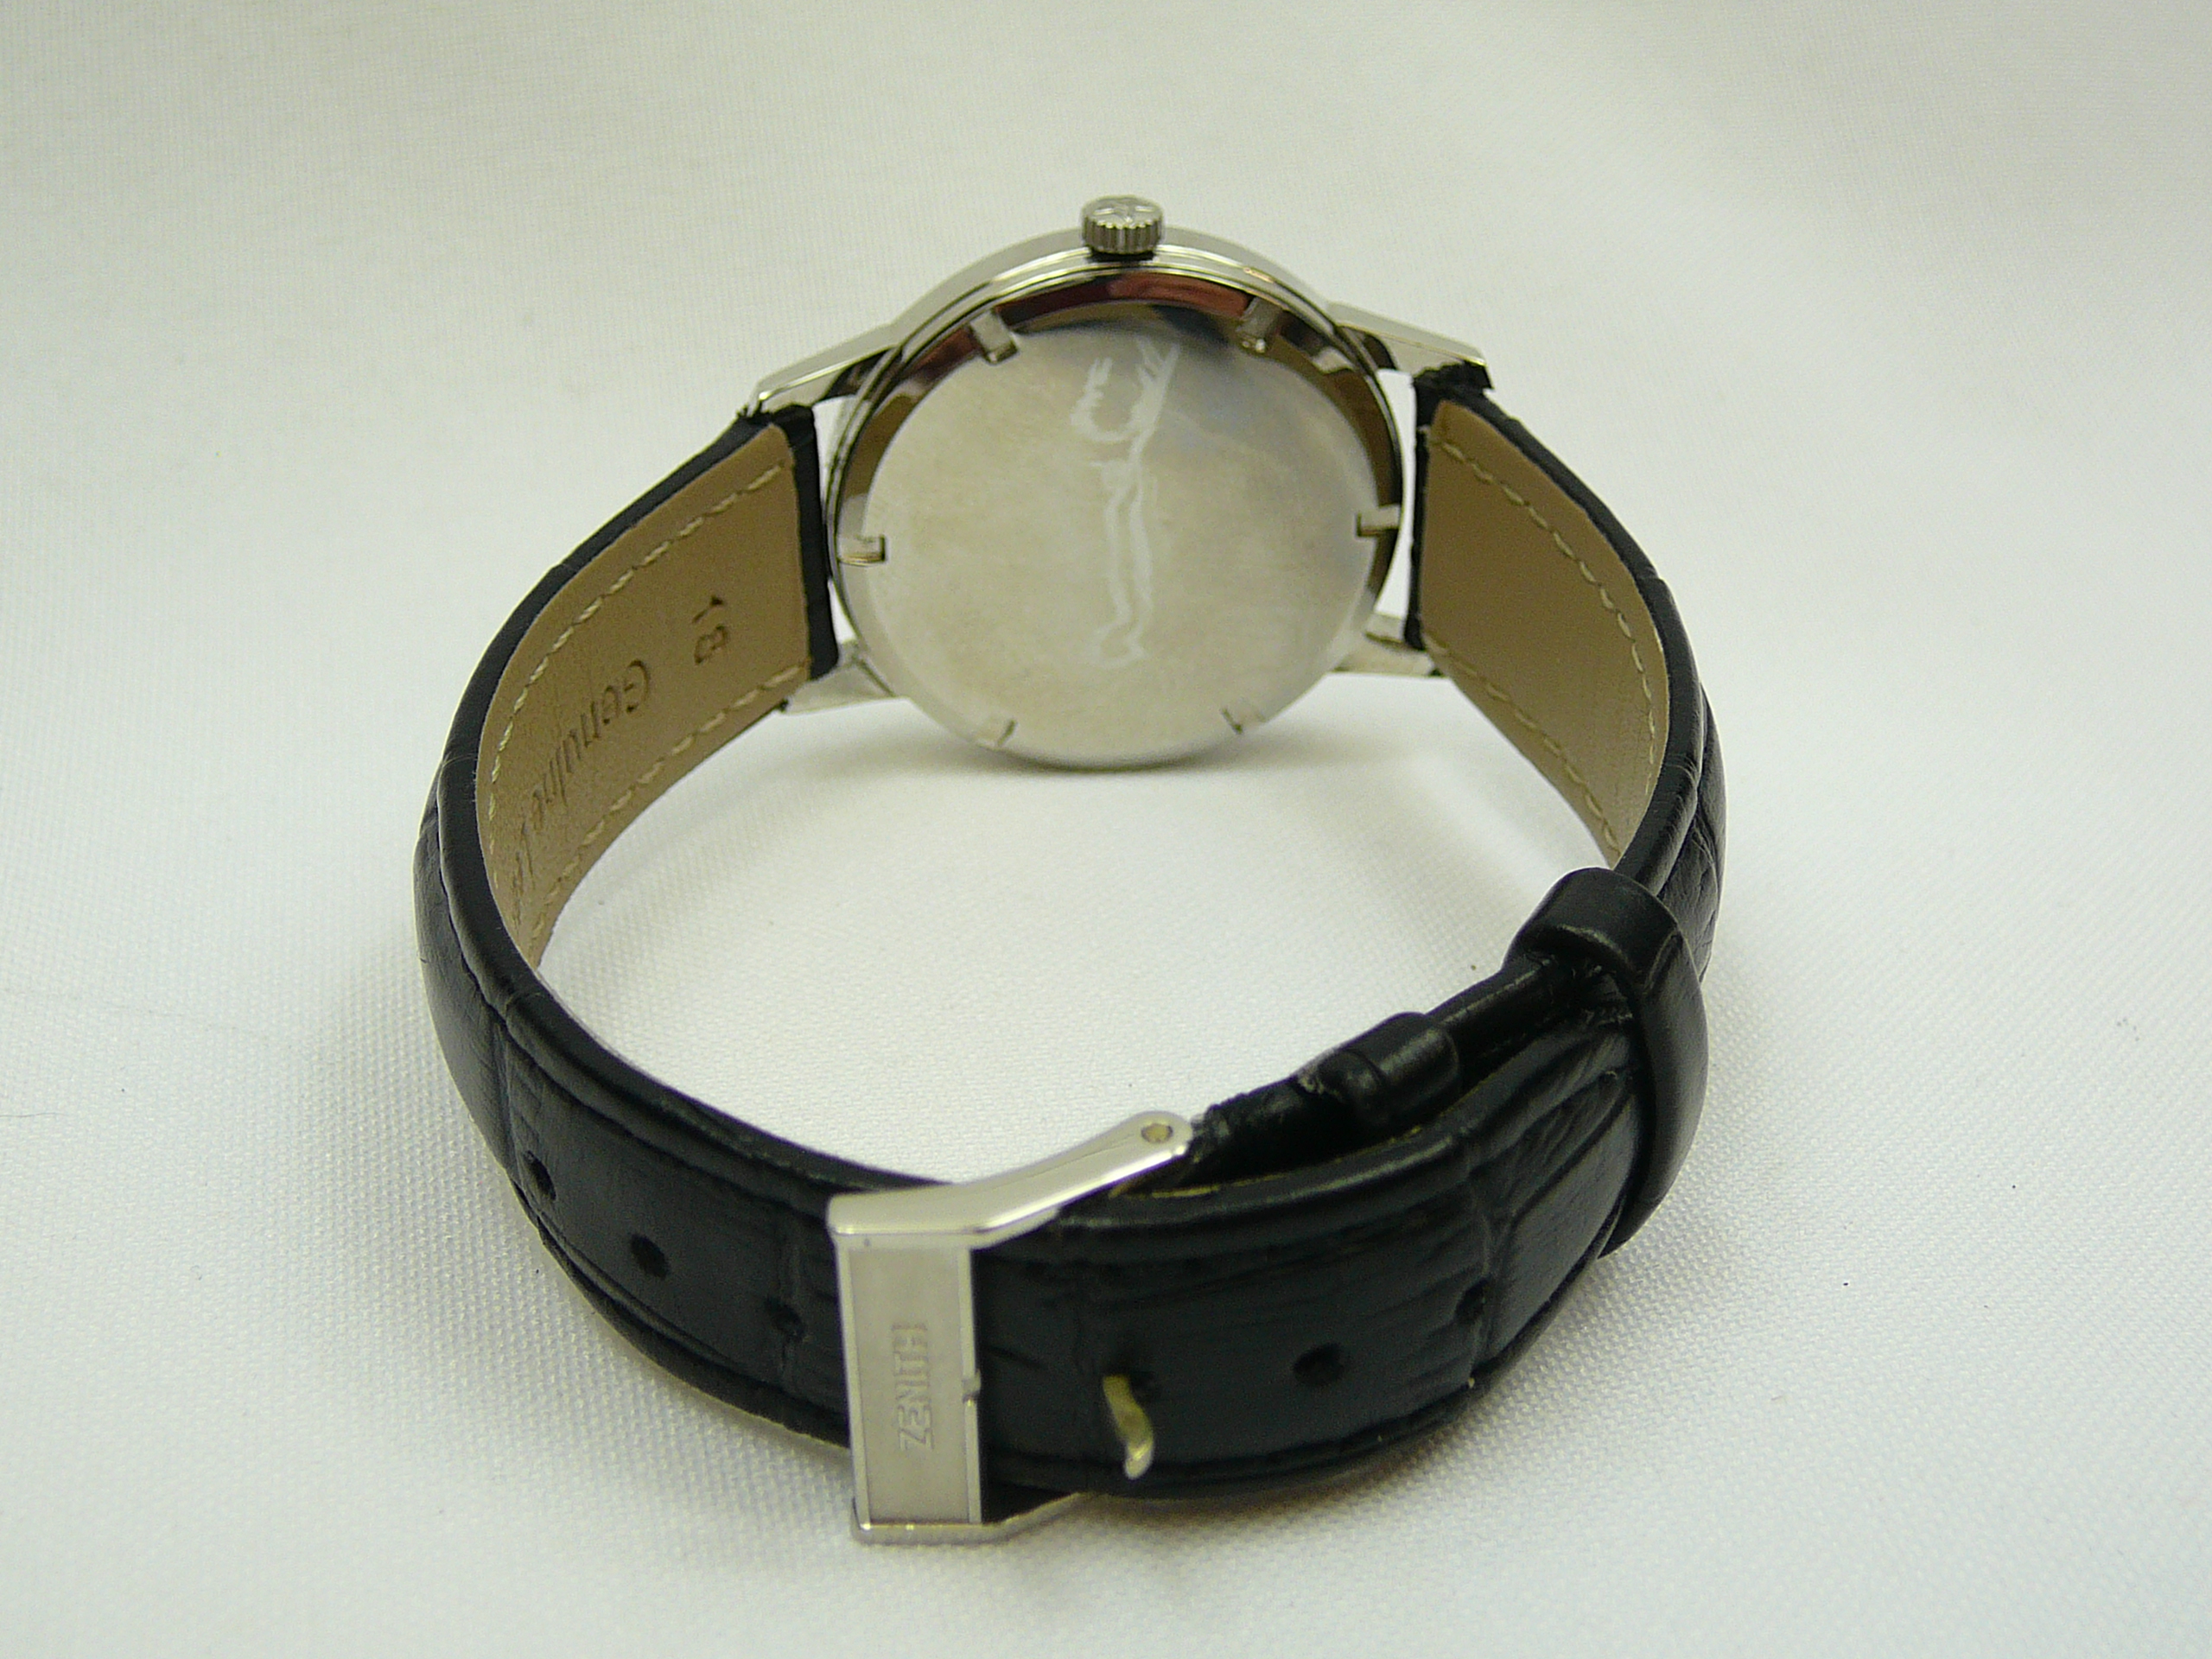 Gents Vintage Zenith Wrist Watch - Image 3 of 3